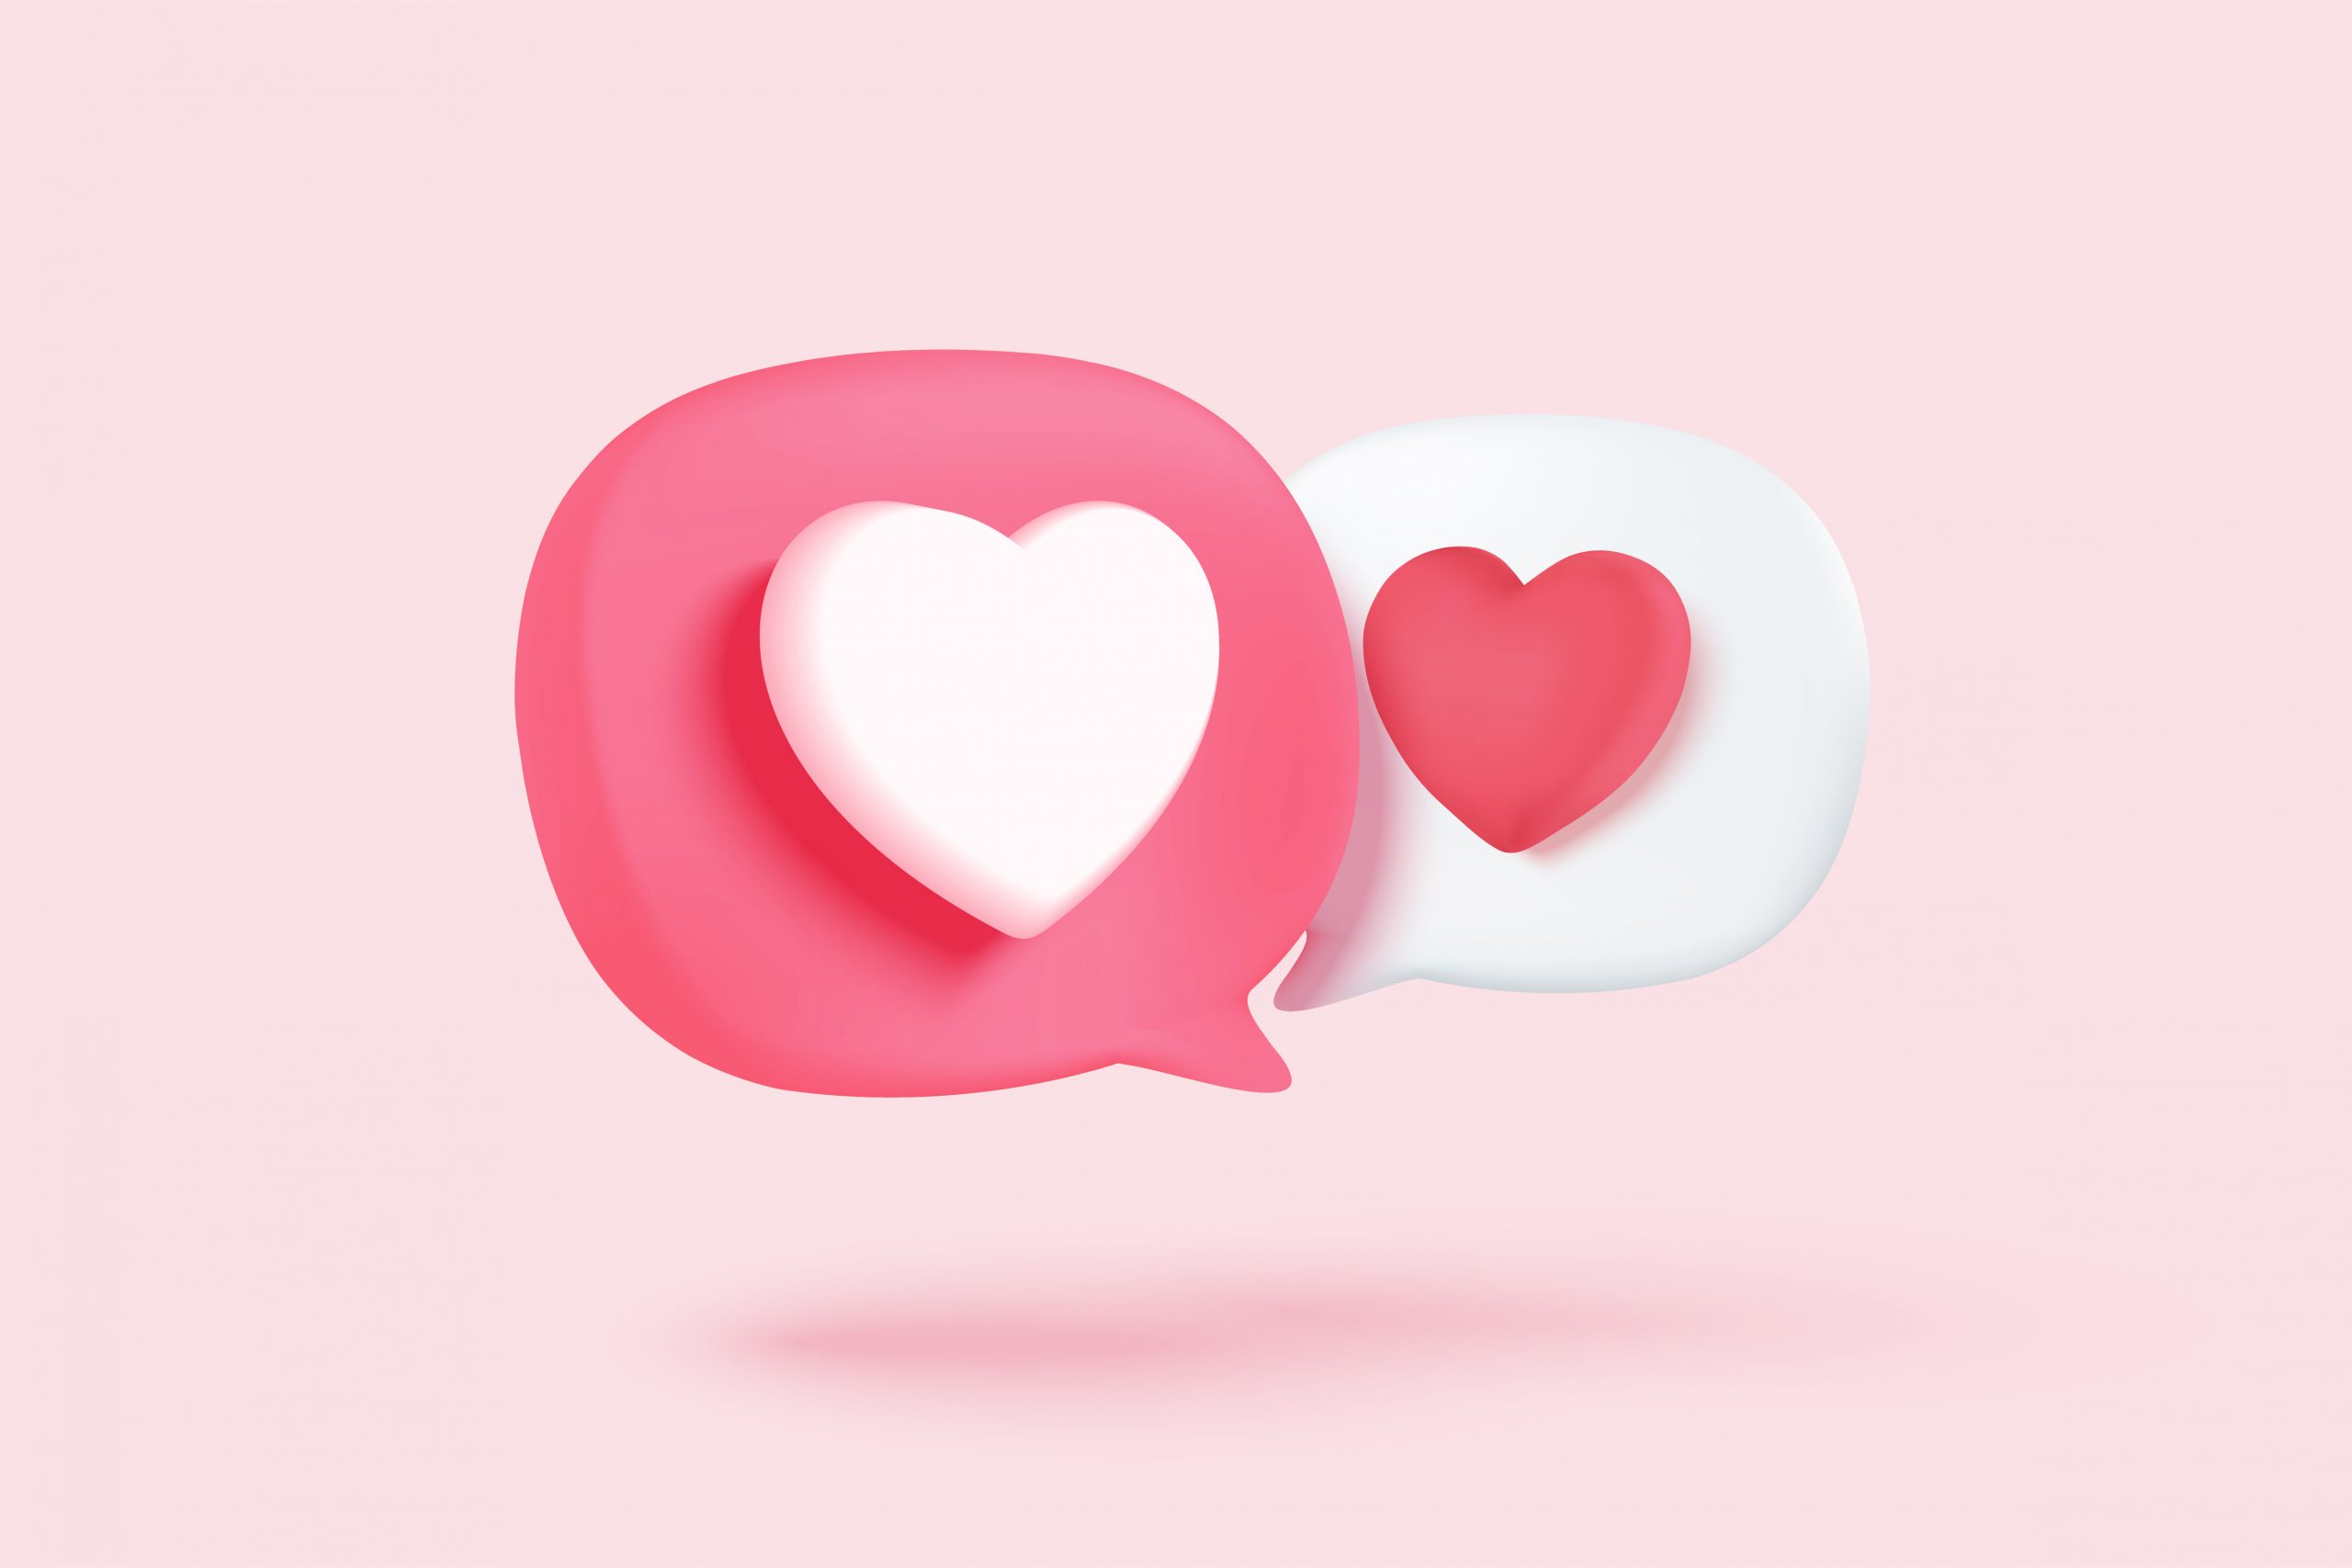 Black Heart Emoji (U+1F5A4)